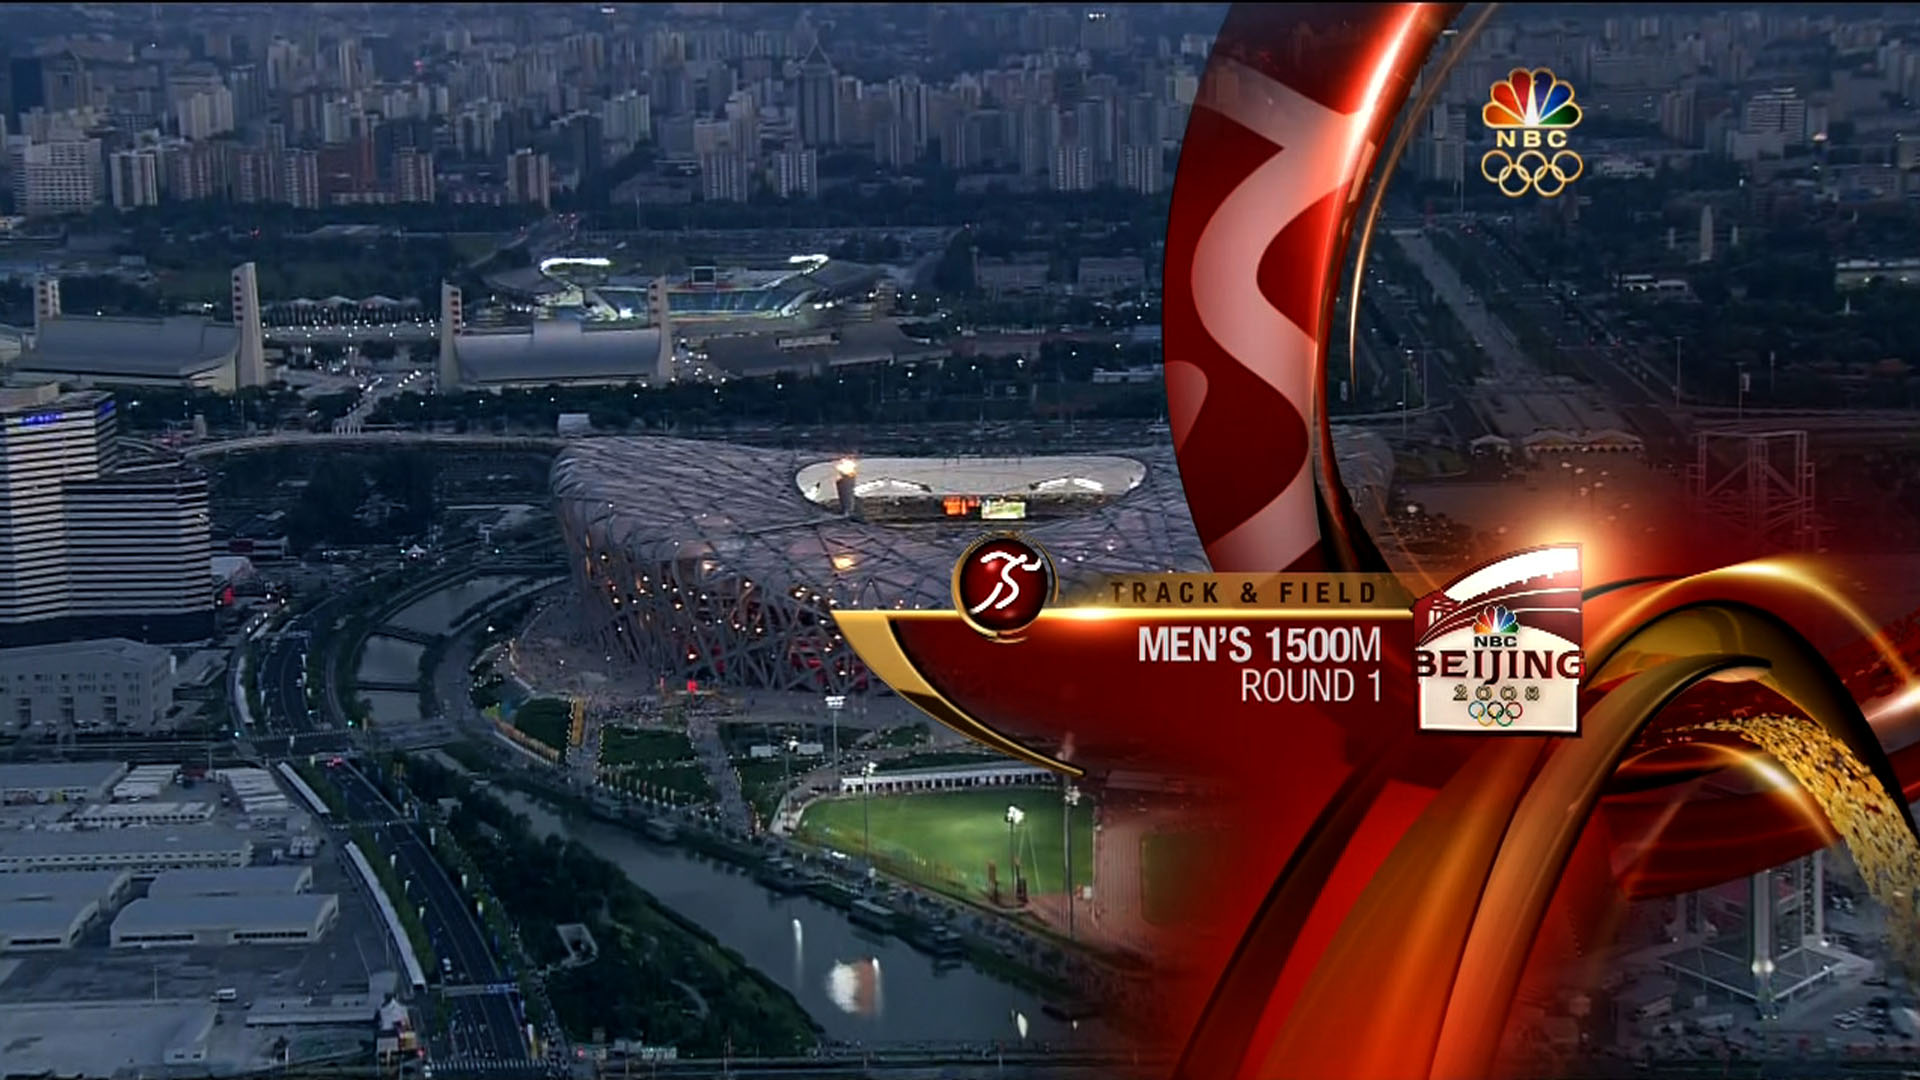 Beijing 2008 – NBC Olympics